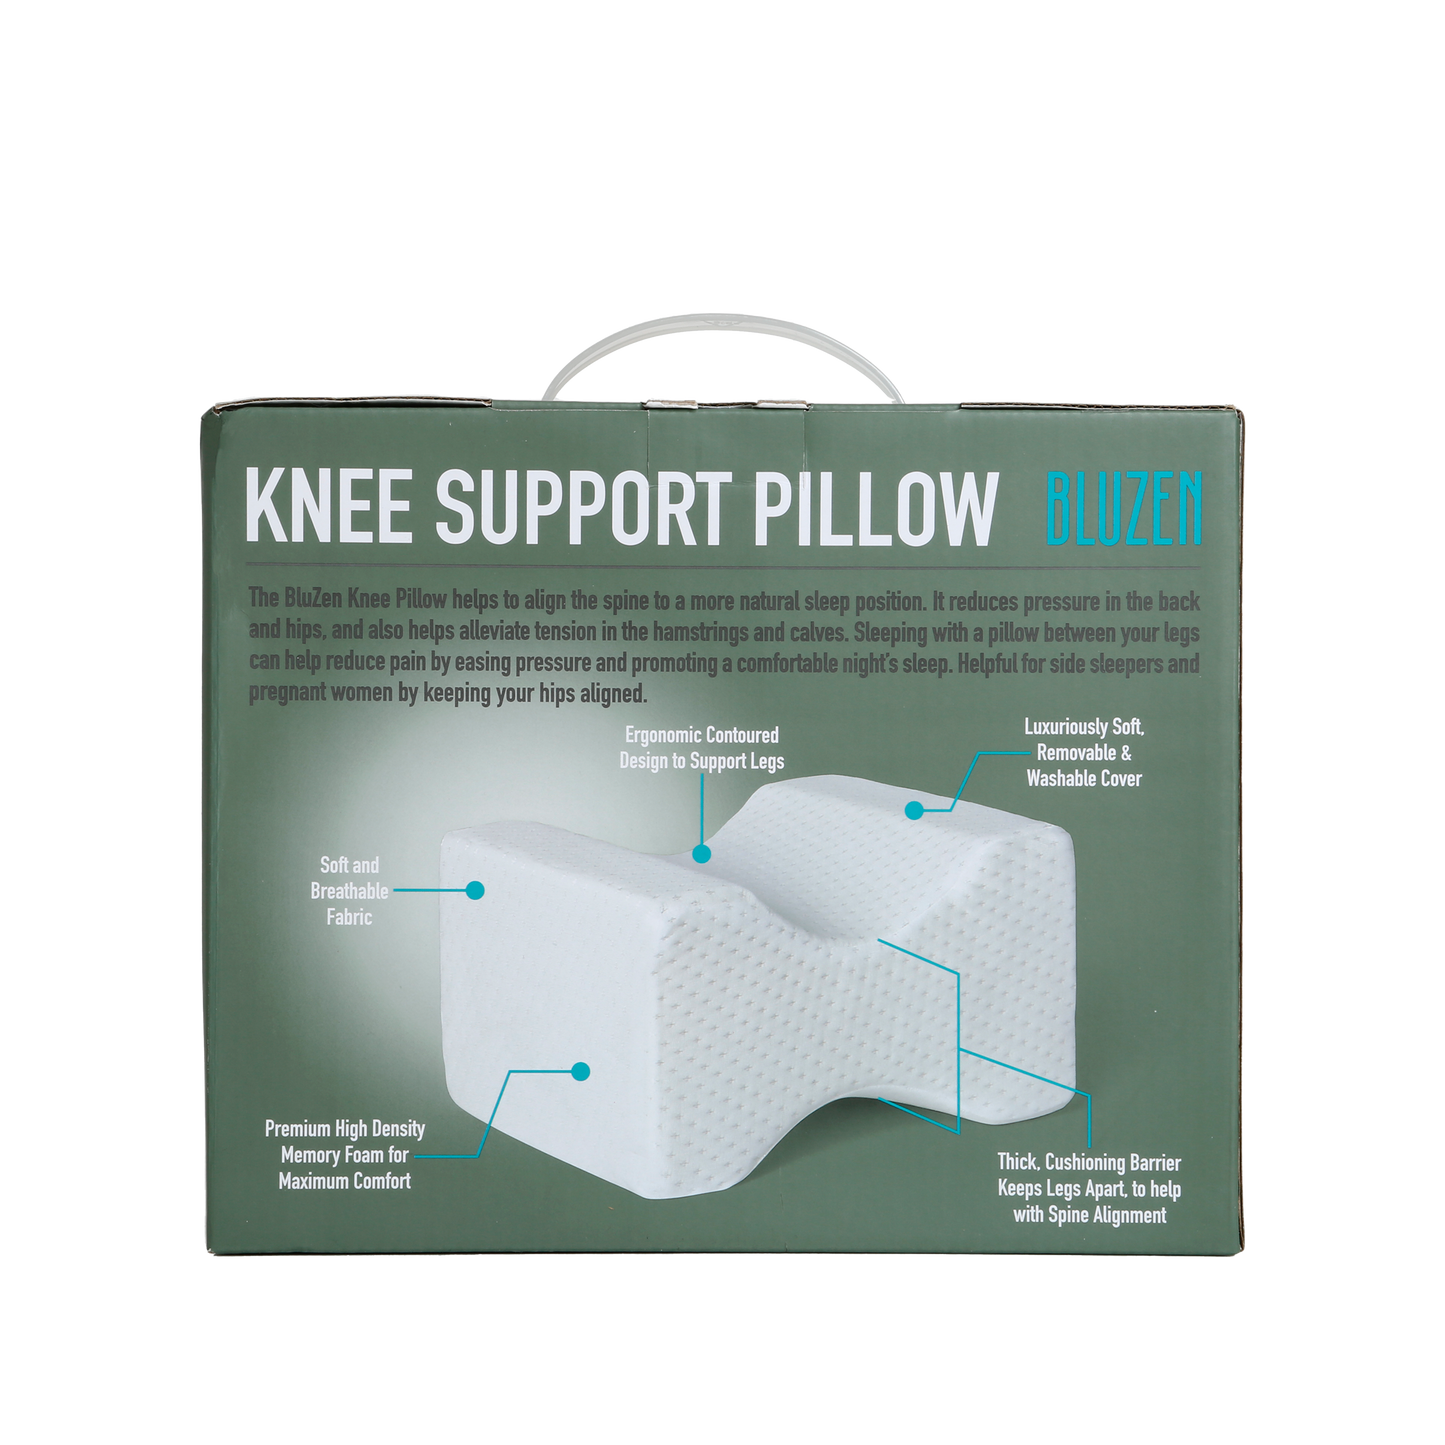 Fun Homes Memory Foam Orthopedic Knee Support Leg Rest Pillow for